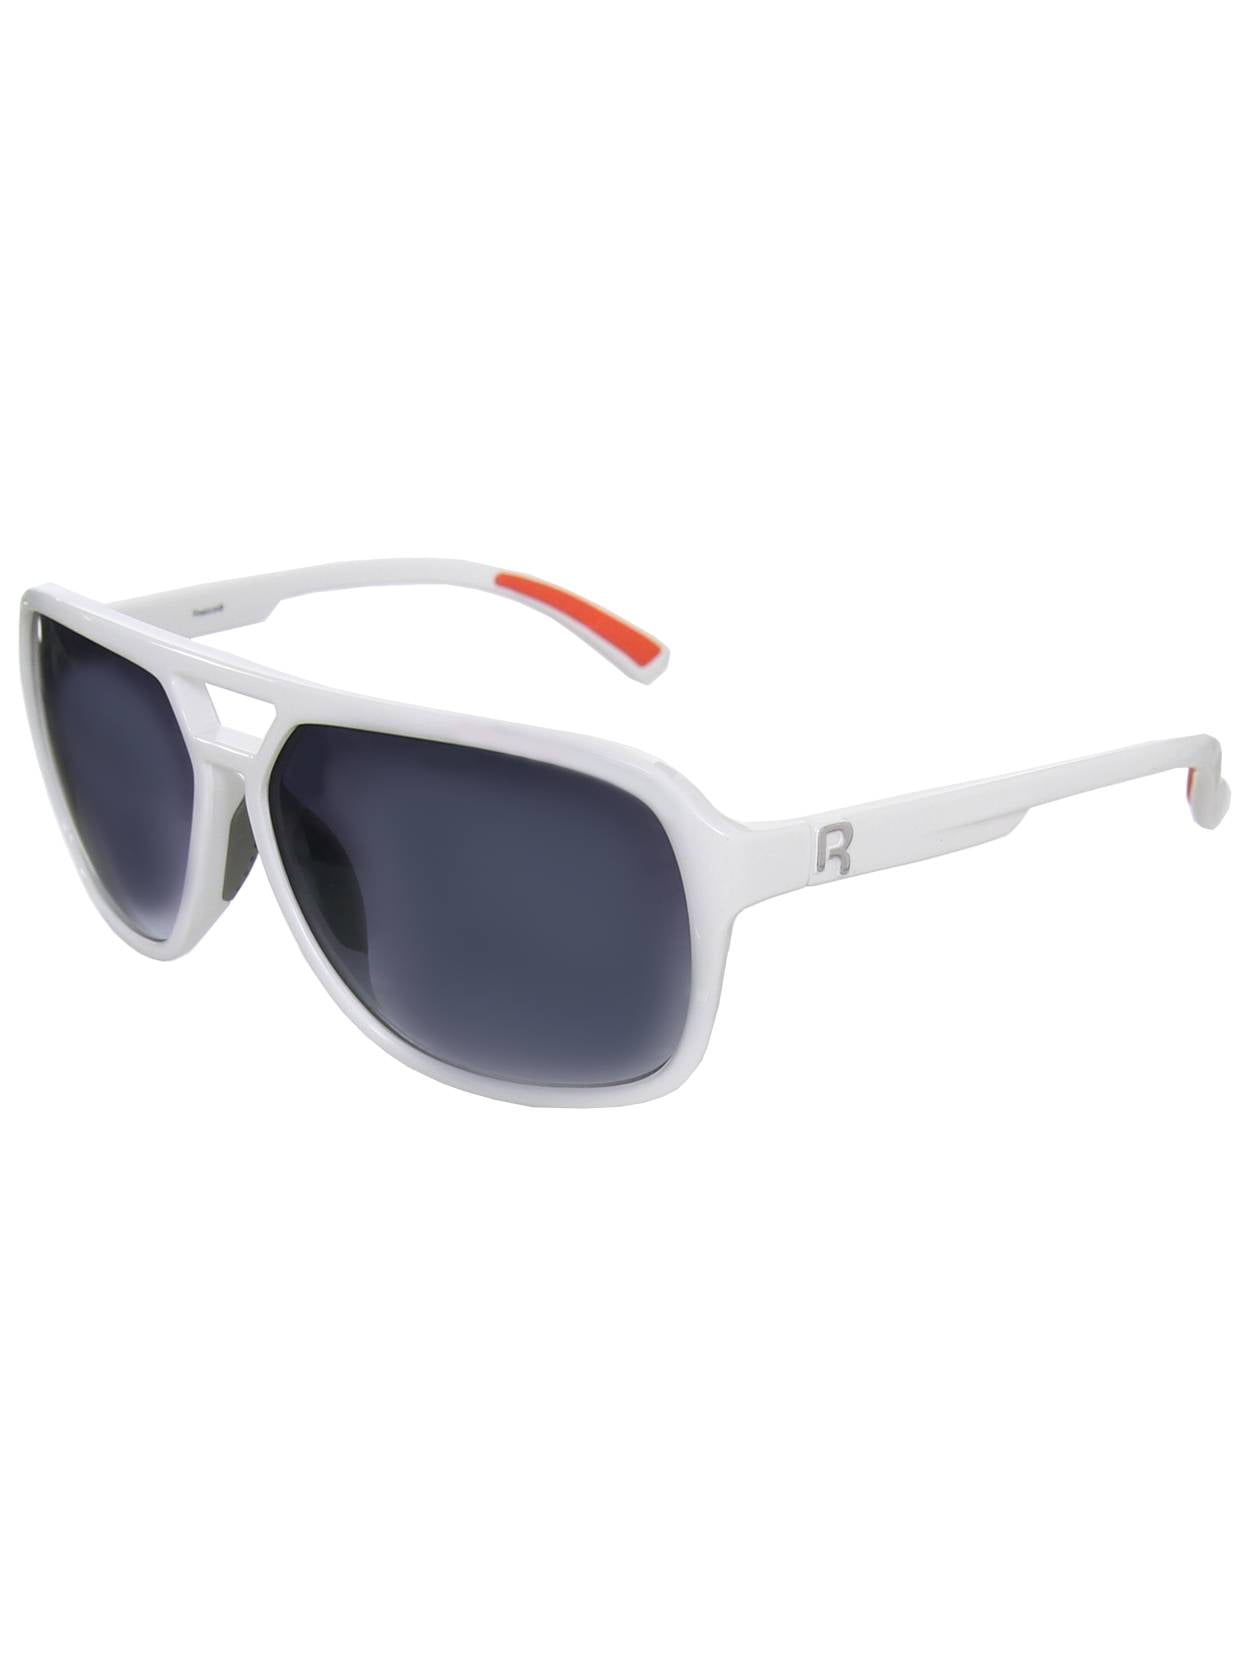 reebok classic 3 sunglasses